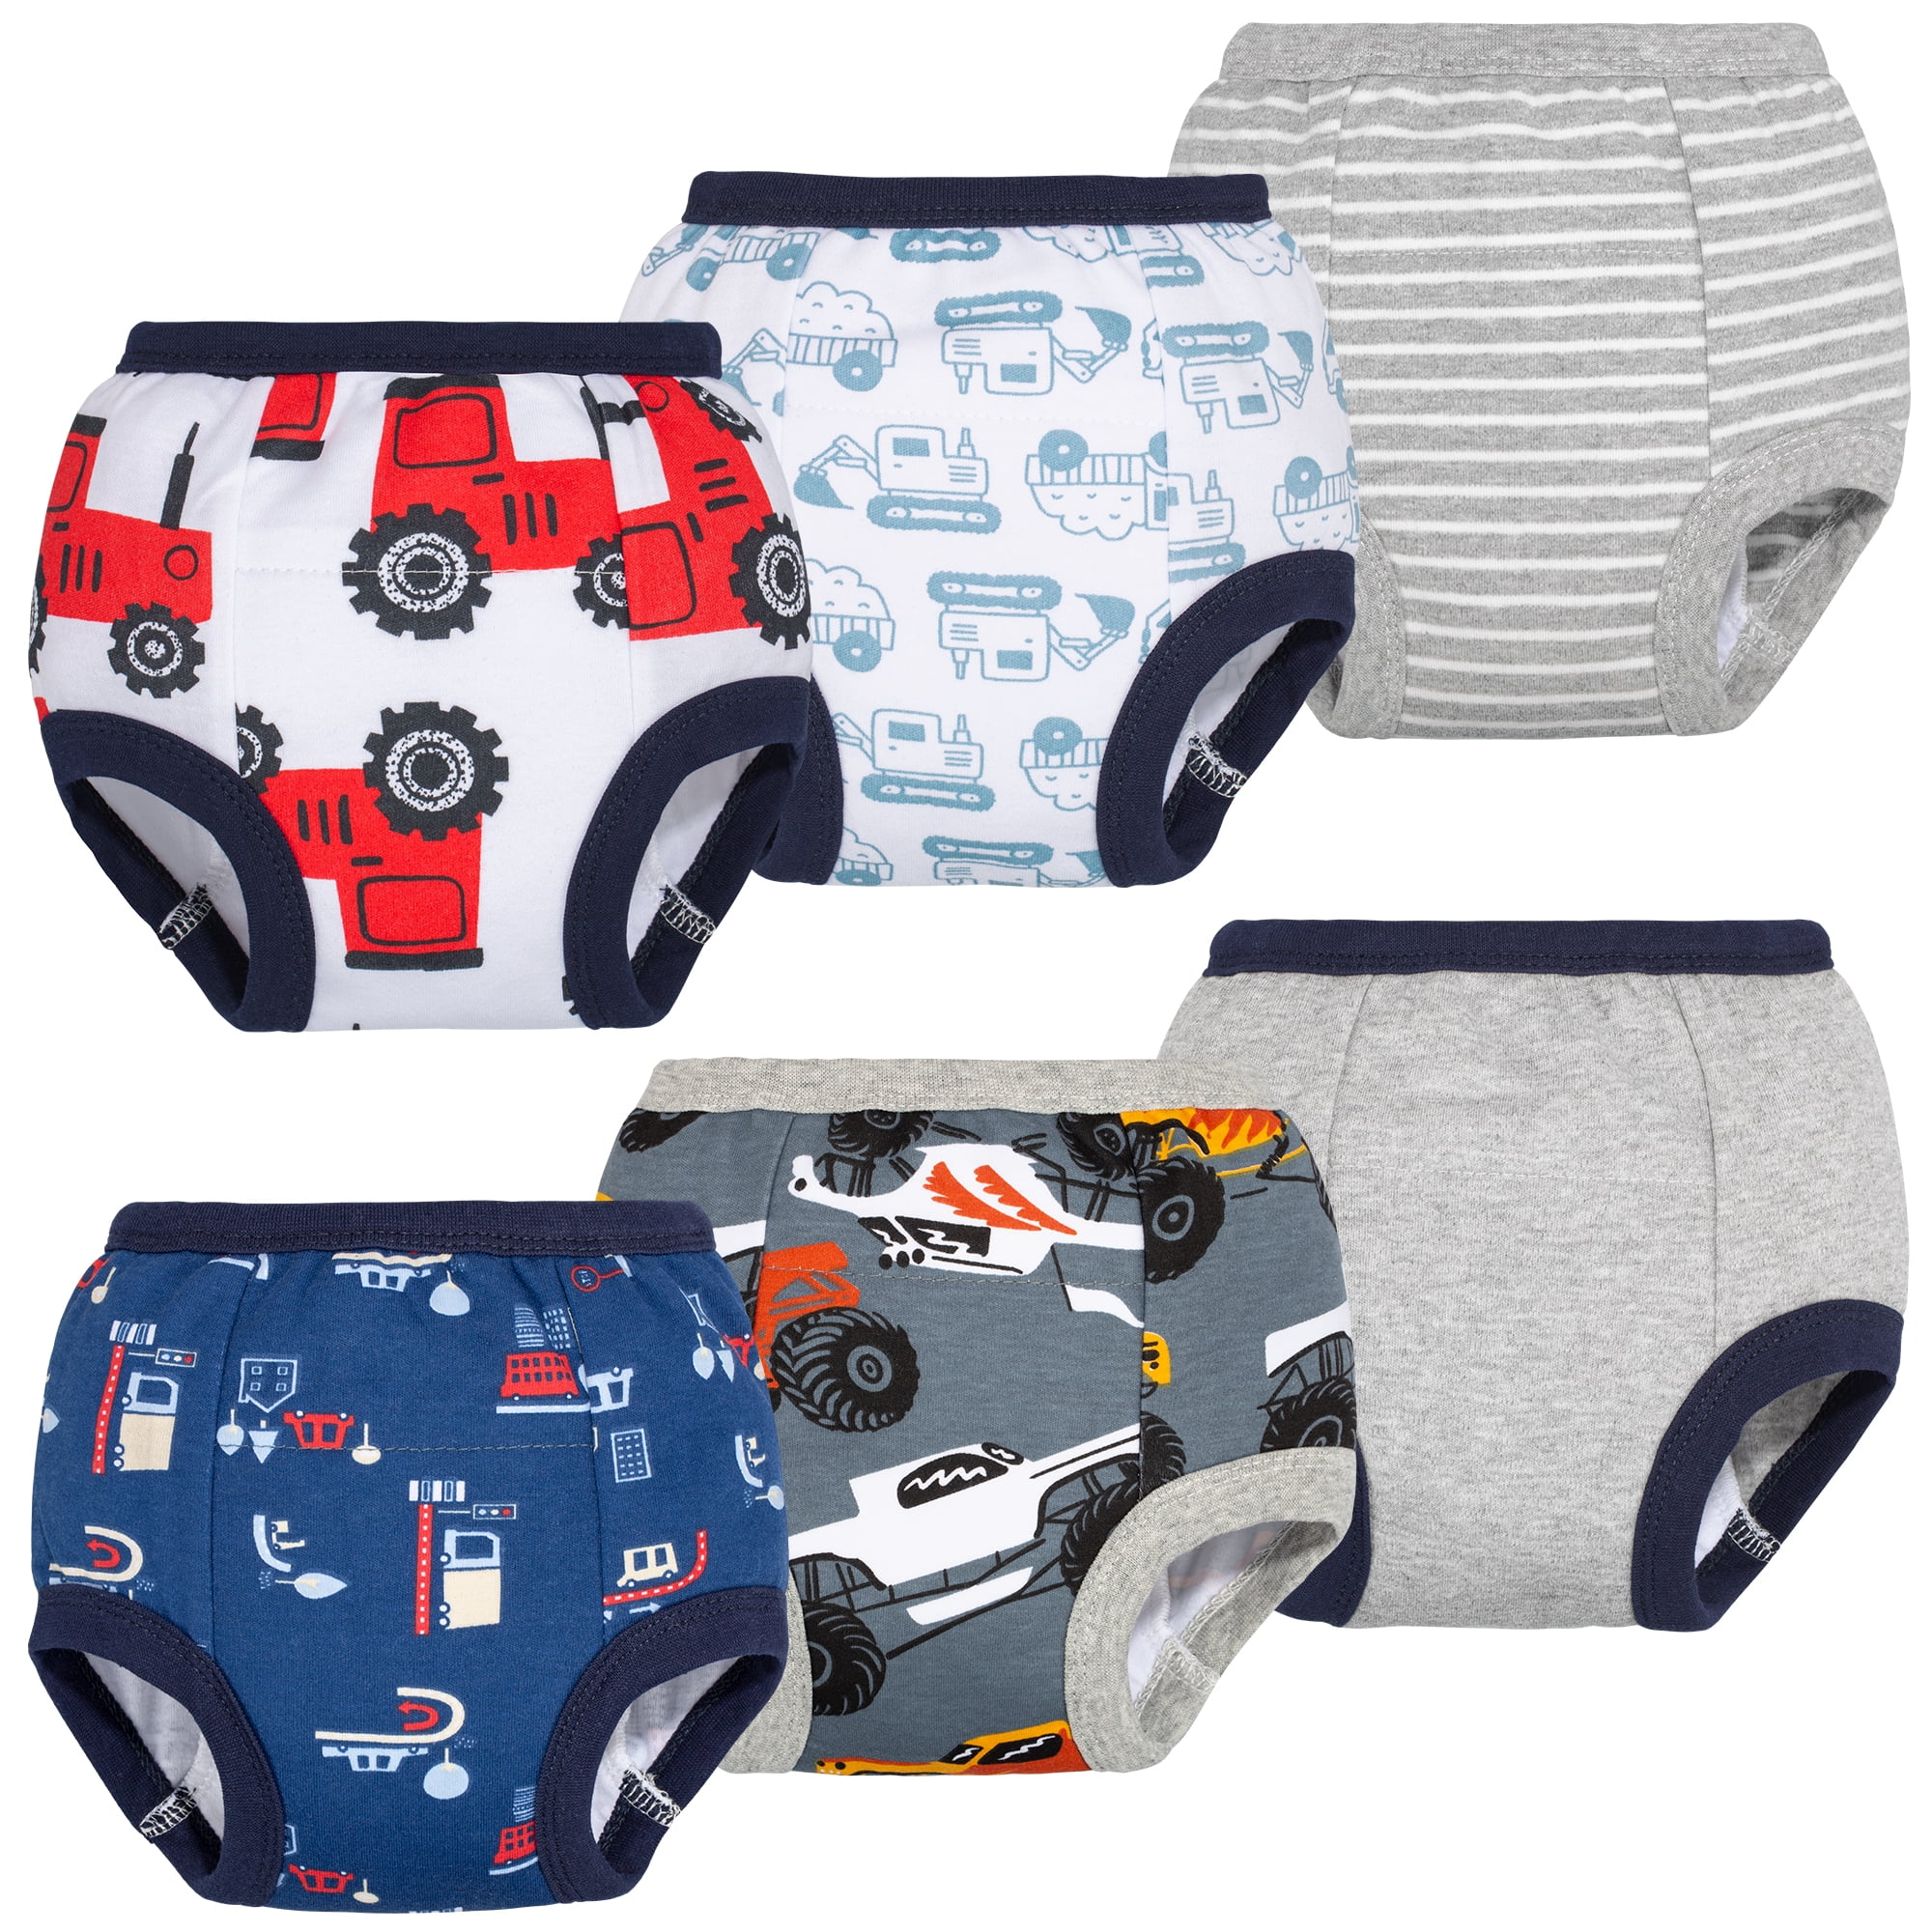 Bluey Toddler Boys' Training Pants, 6 - Pack, Sizes 4T 